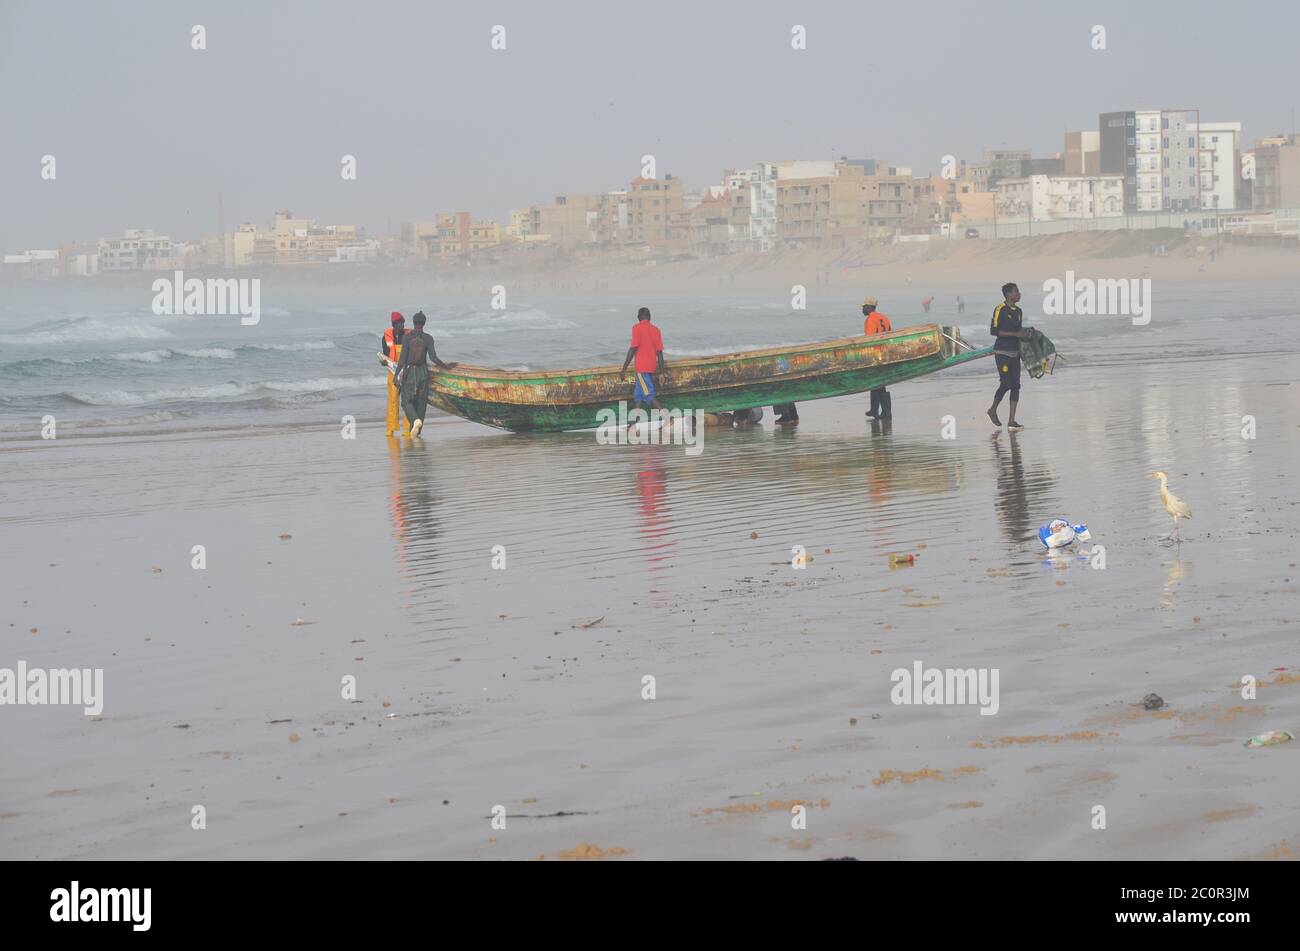 A group of artisanal fishers pushing a pirogue in Yoff beach, Dakar, Senegal Stock Photo